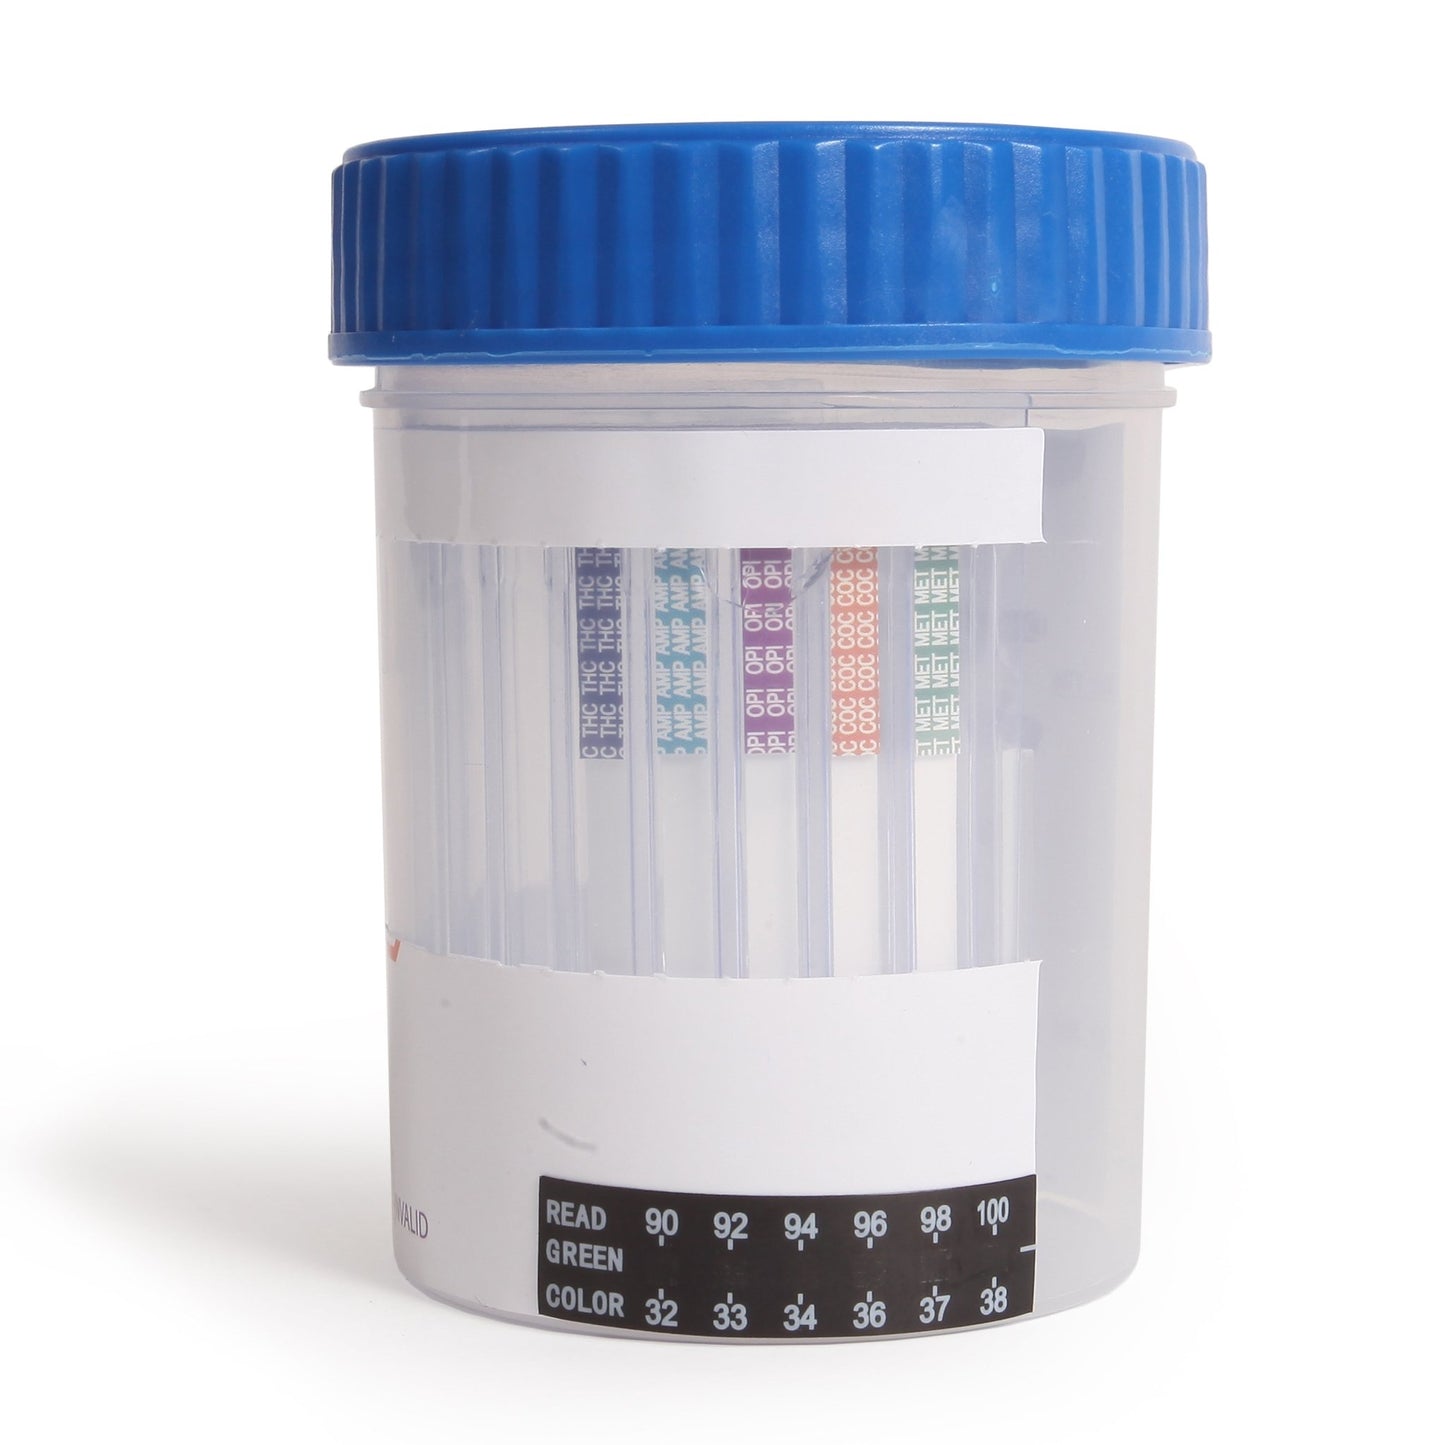 Healgen 10 Panel Drug Cup Tests - Verséa Diagnostics